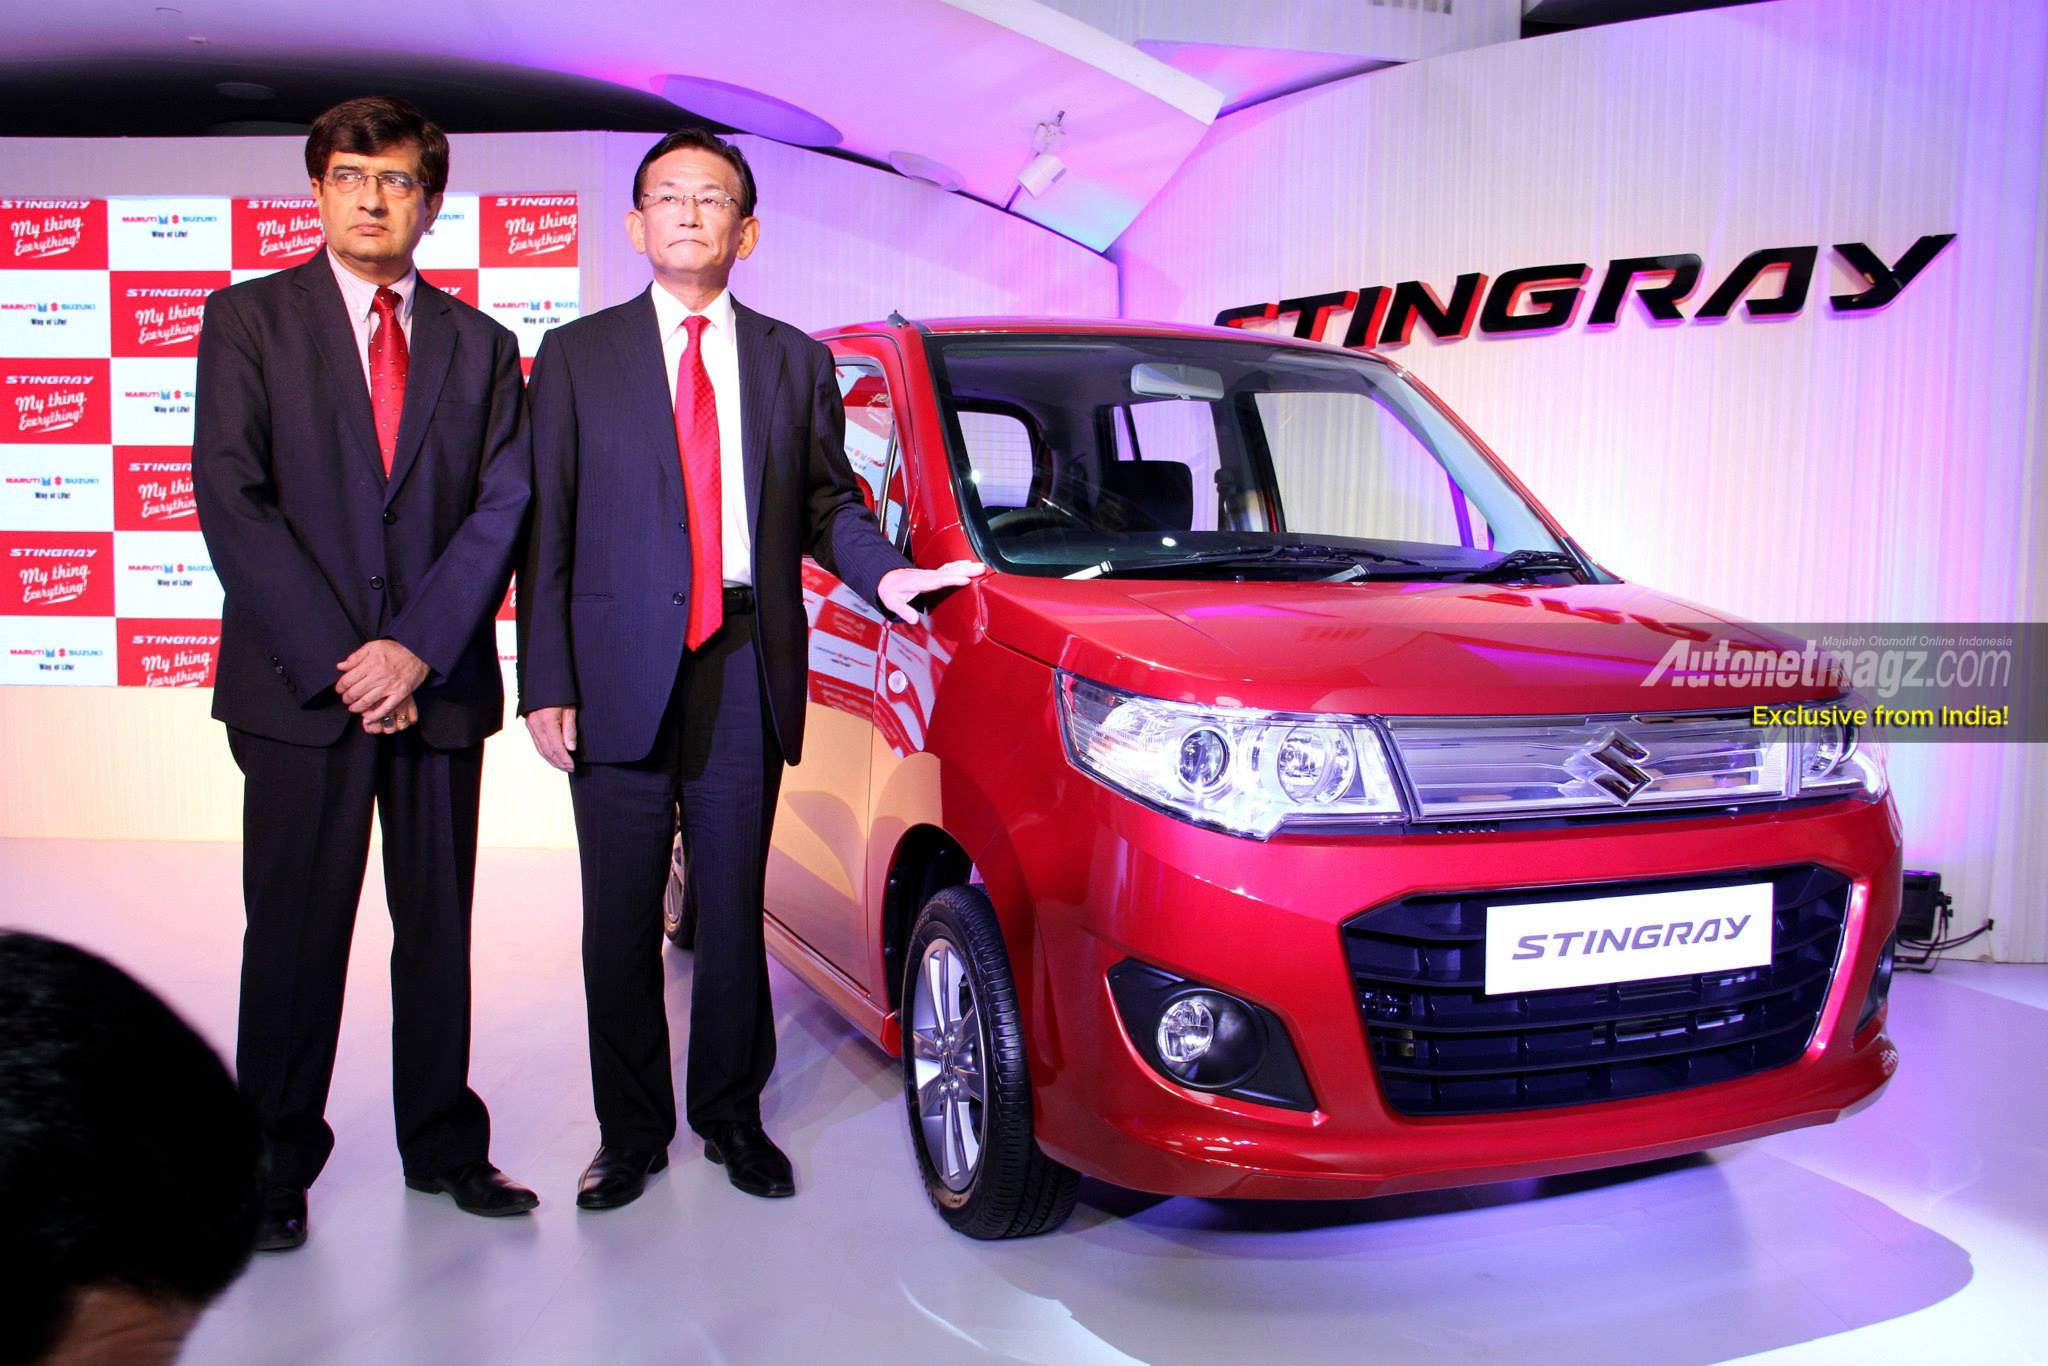 International, Suzuki Stingray wallpaper: Suzuki Stingray India Ternyata Sama Dengan Wagon R India